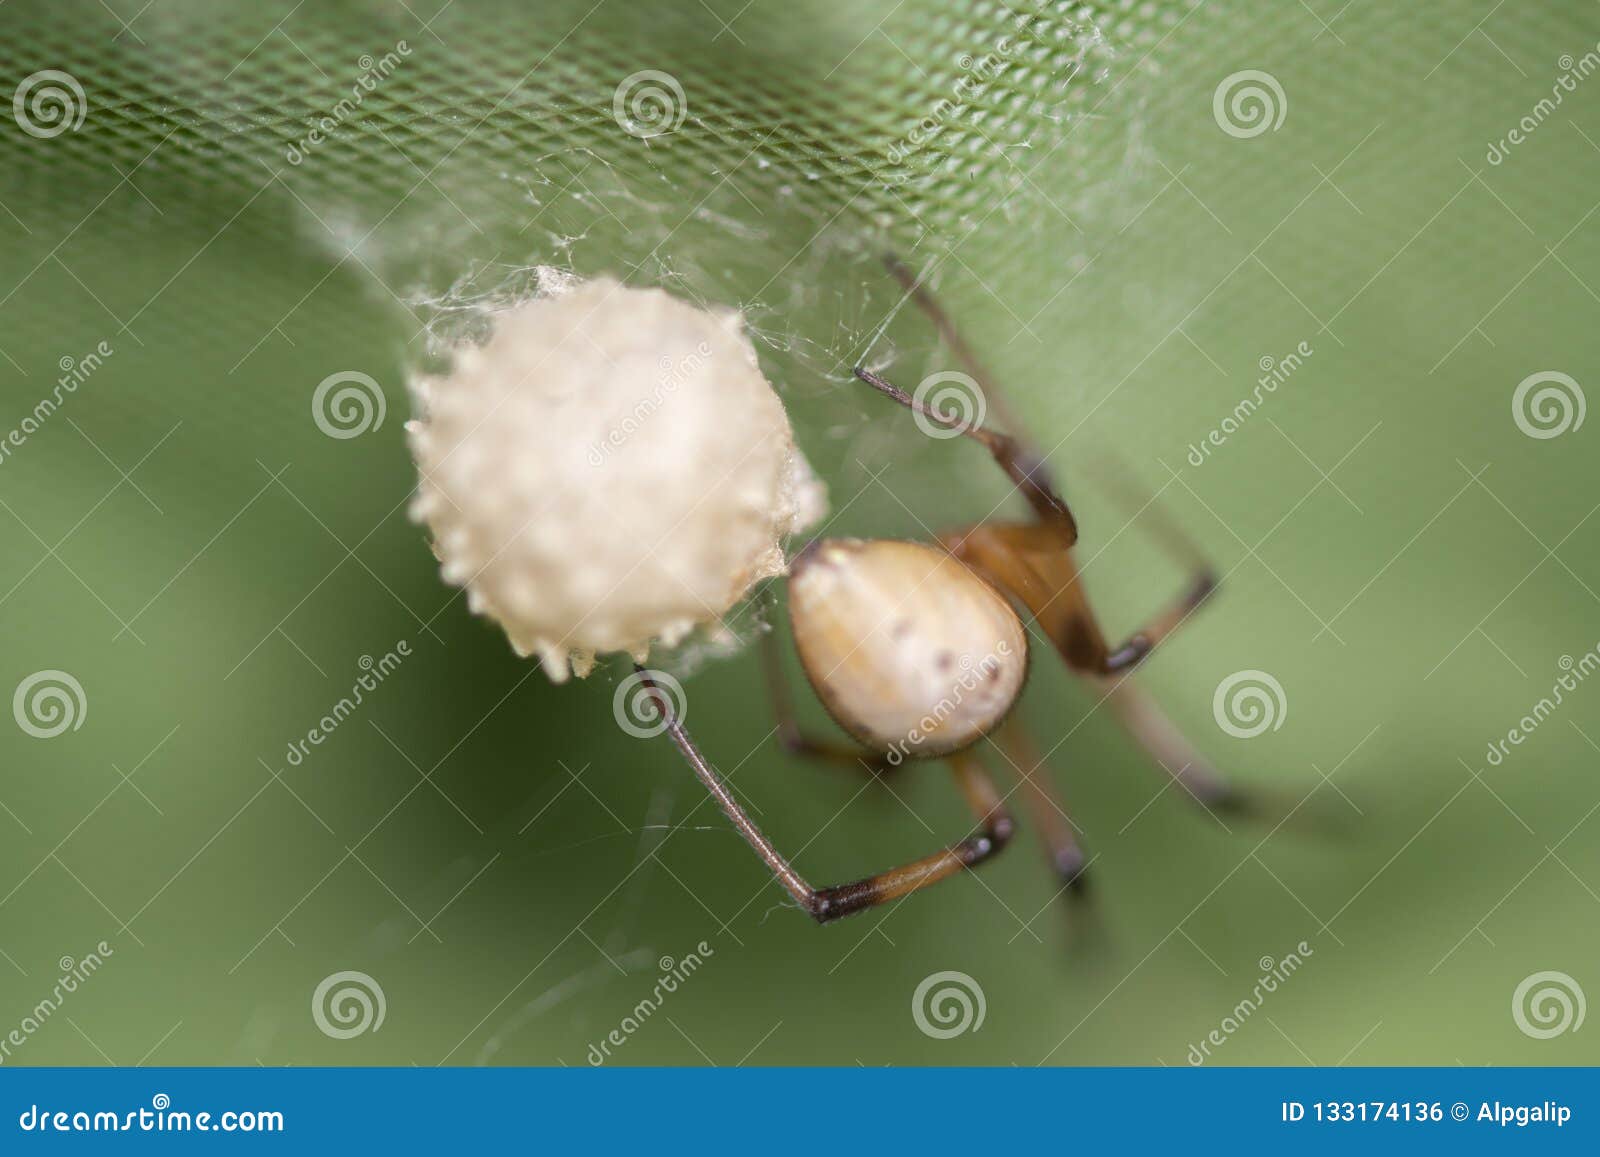 Black Widow Spider with Egg Sac & Babies (c).jpg